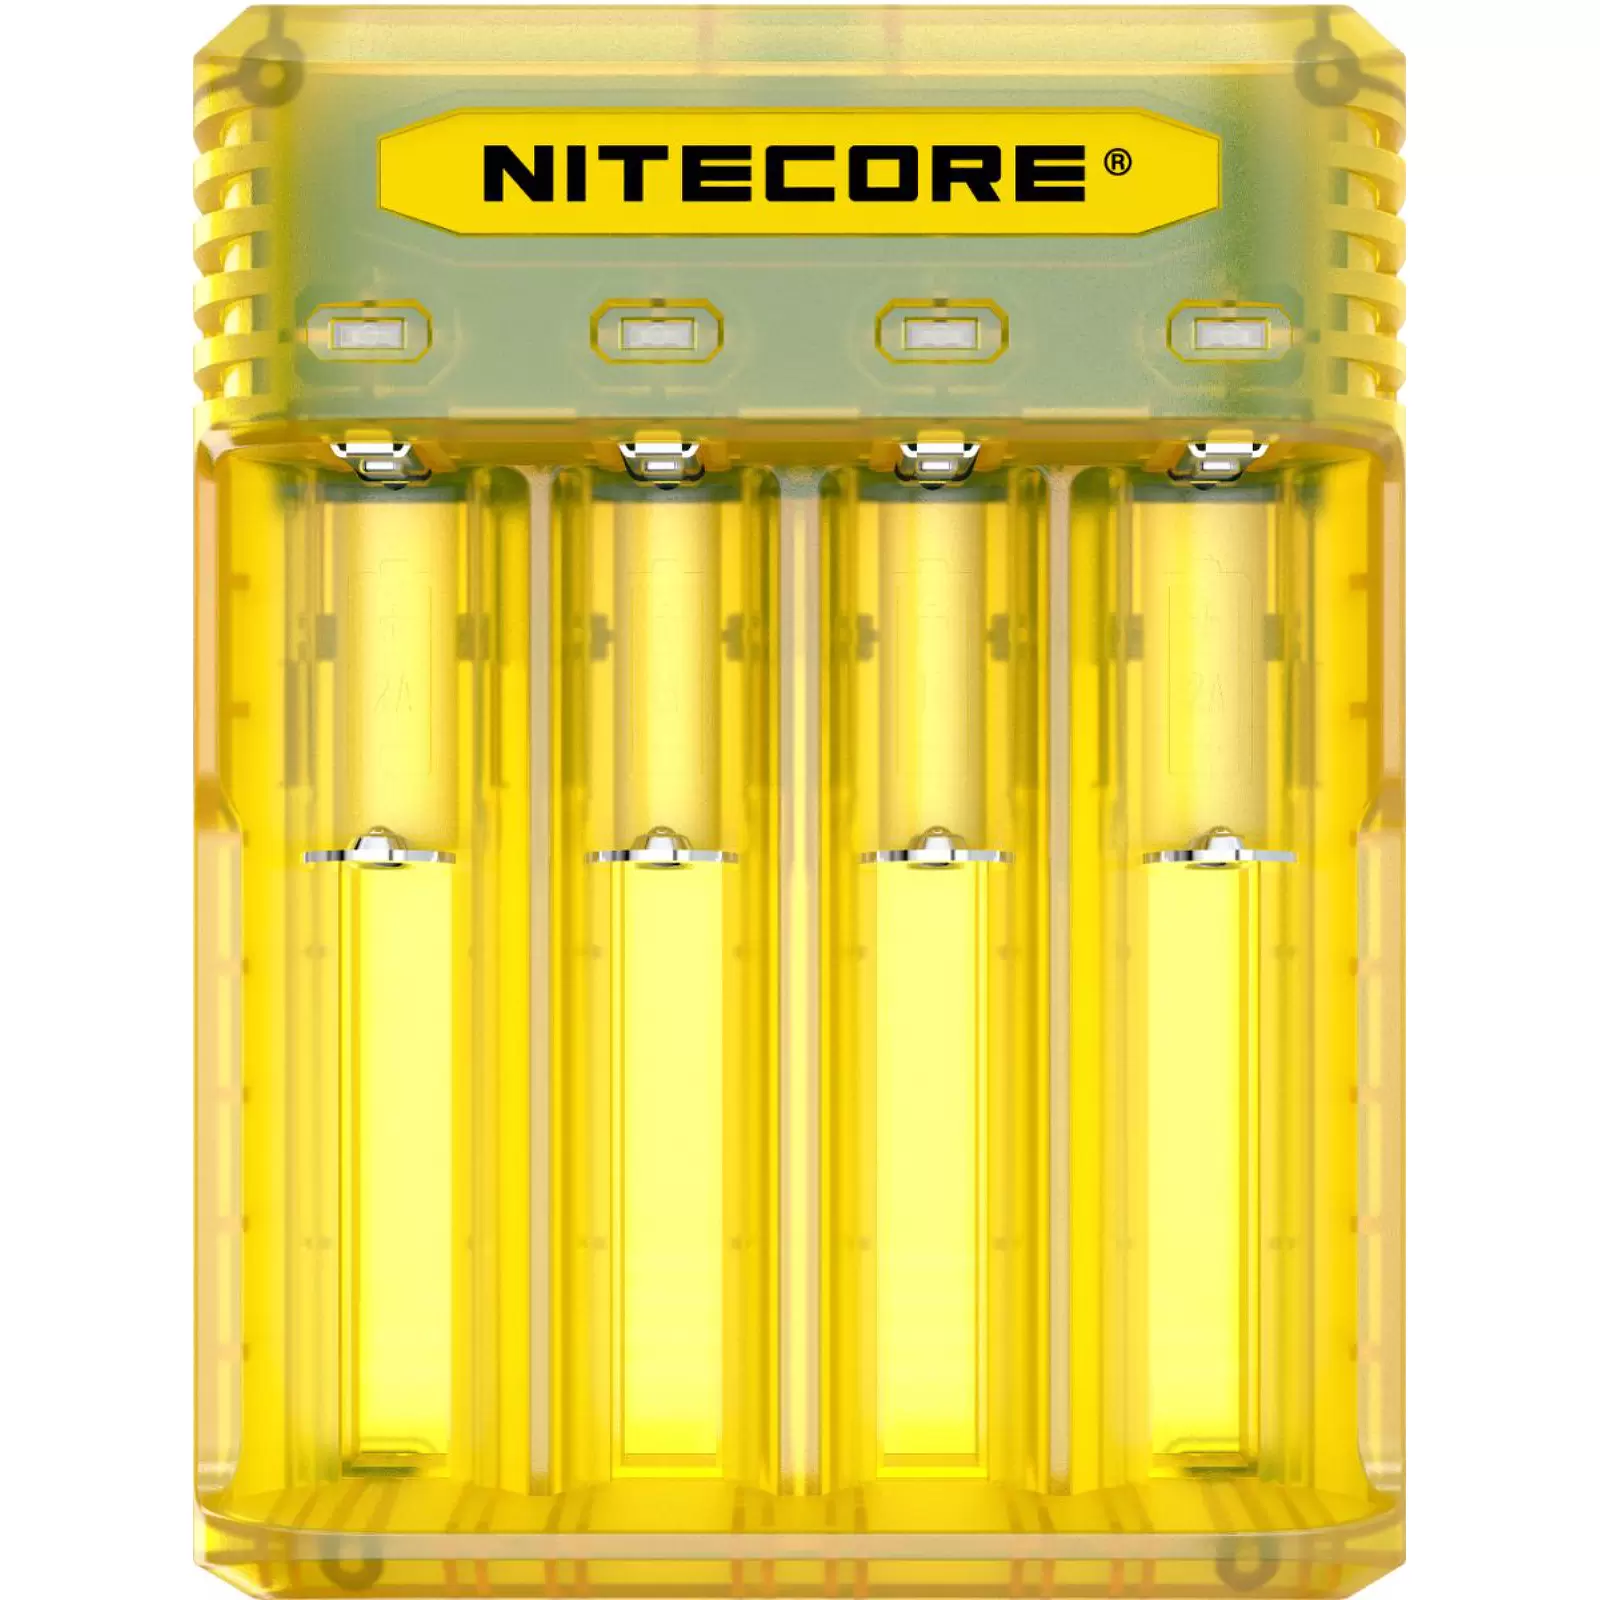 Nitecore Q4 Universal-Ladegerät für E-Zigaretten Li-Ion und IMR Akkus